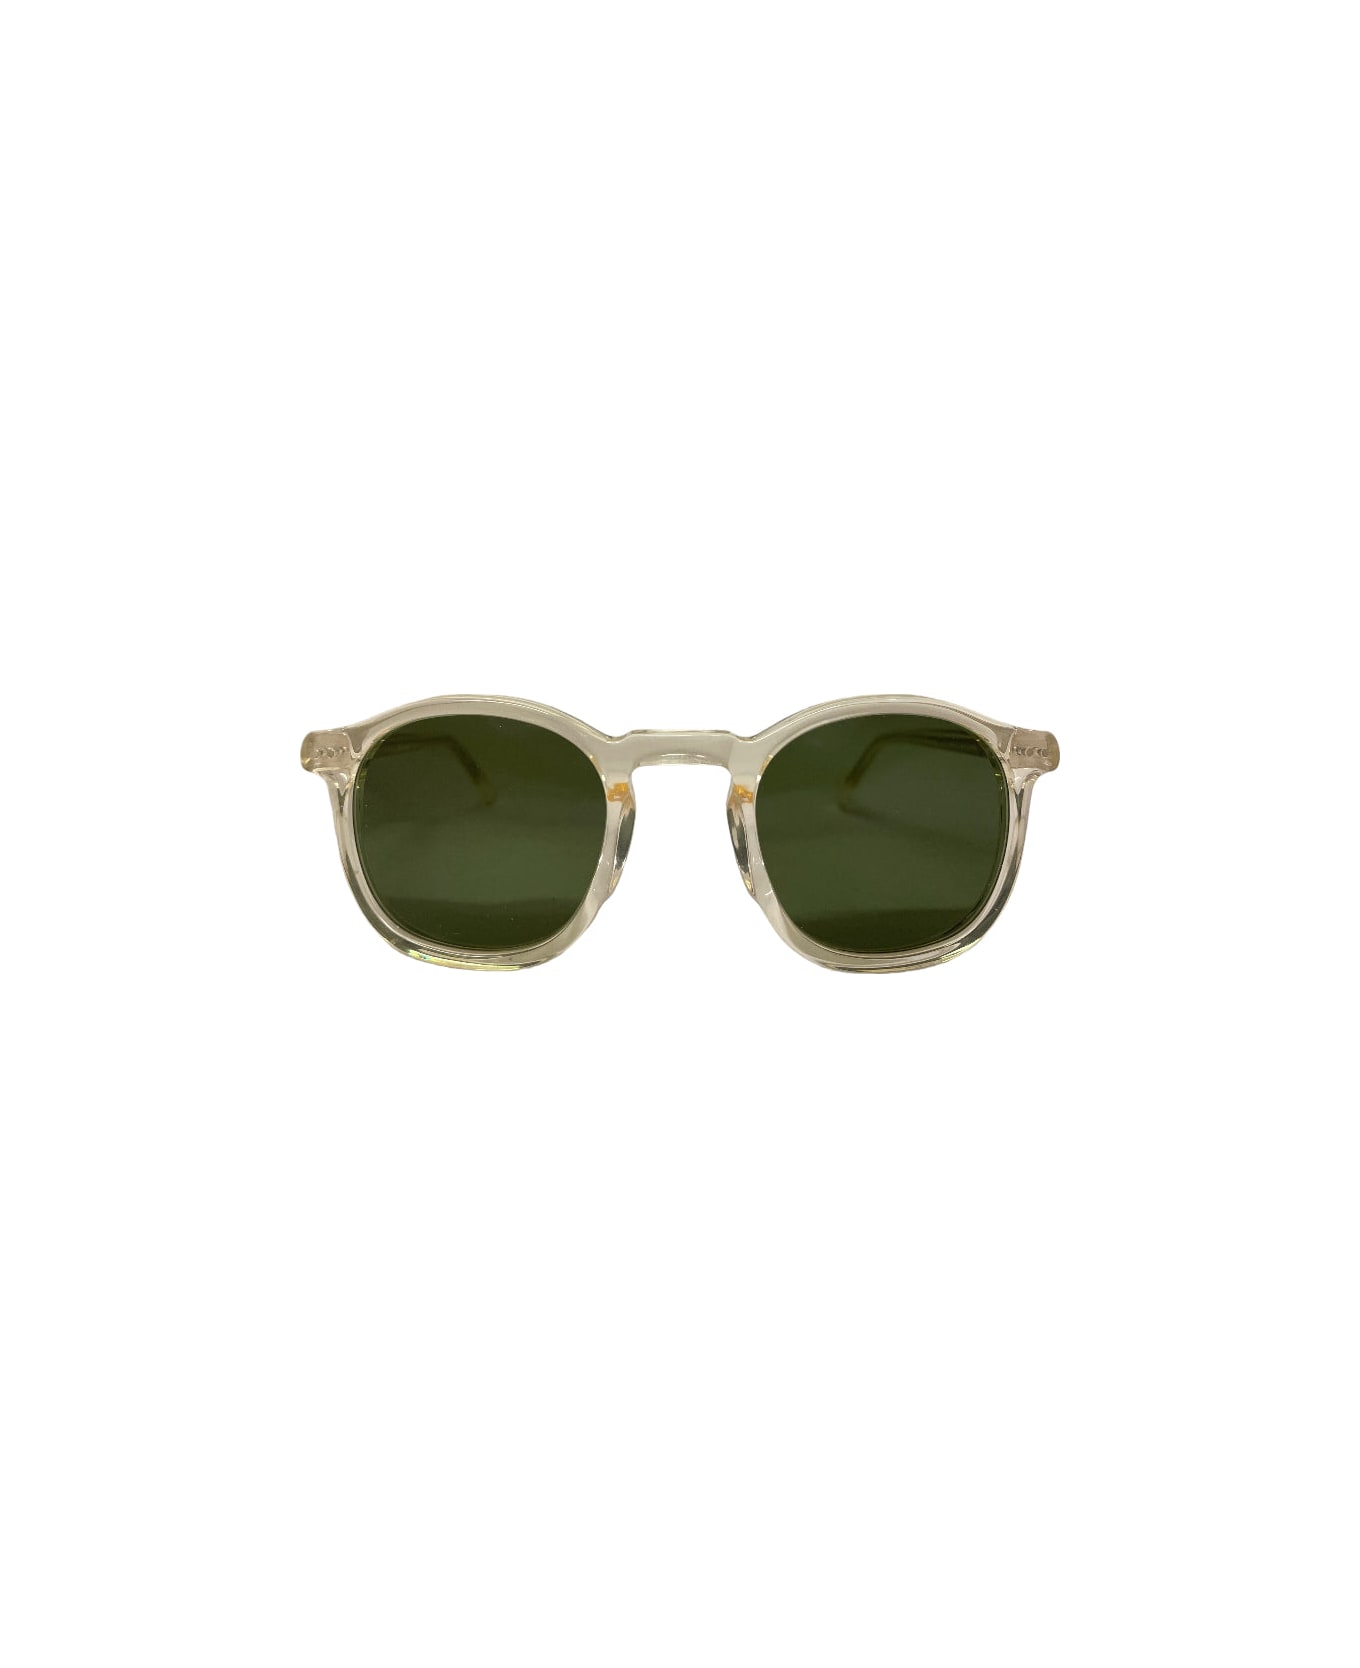 Lesca Gab2 - Champagne - Col. 186 Sunglasses サングラス